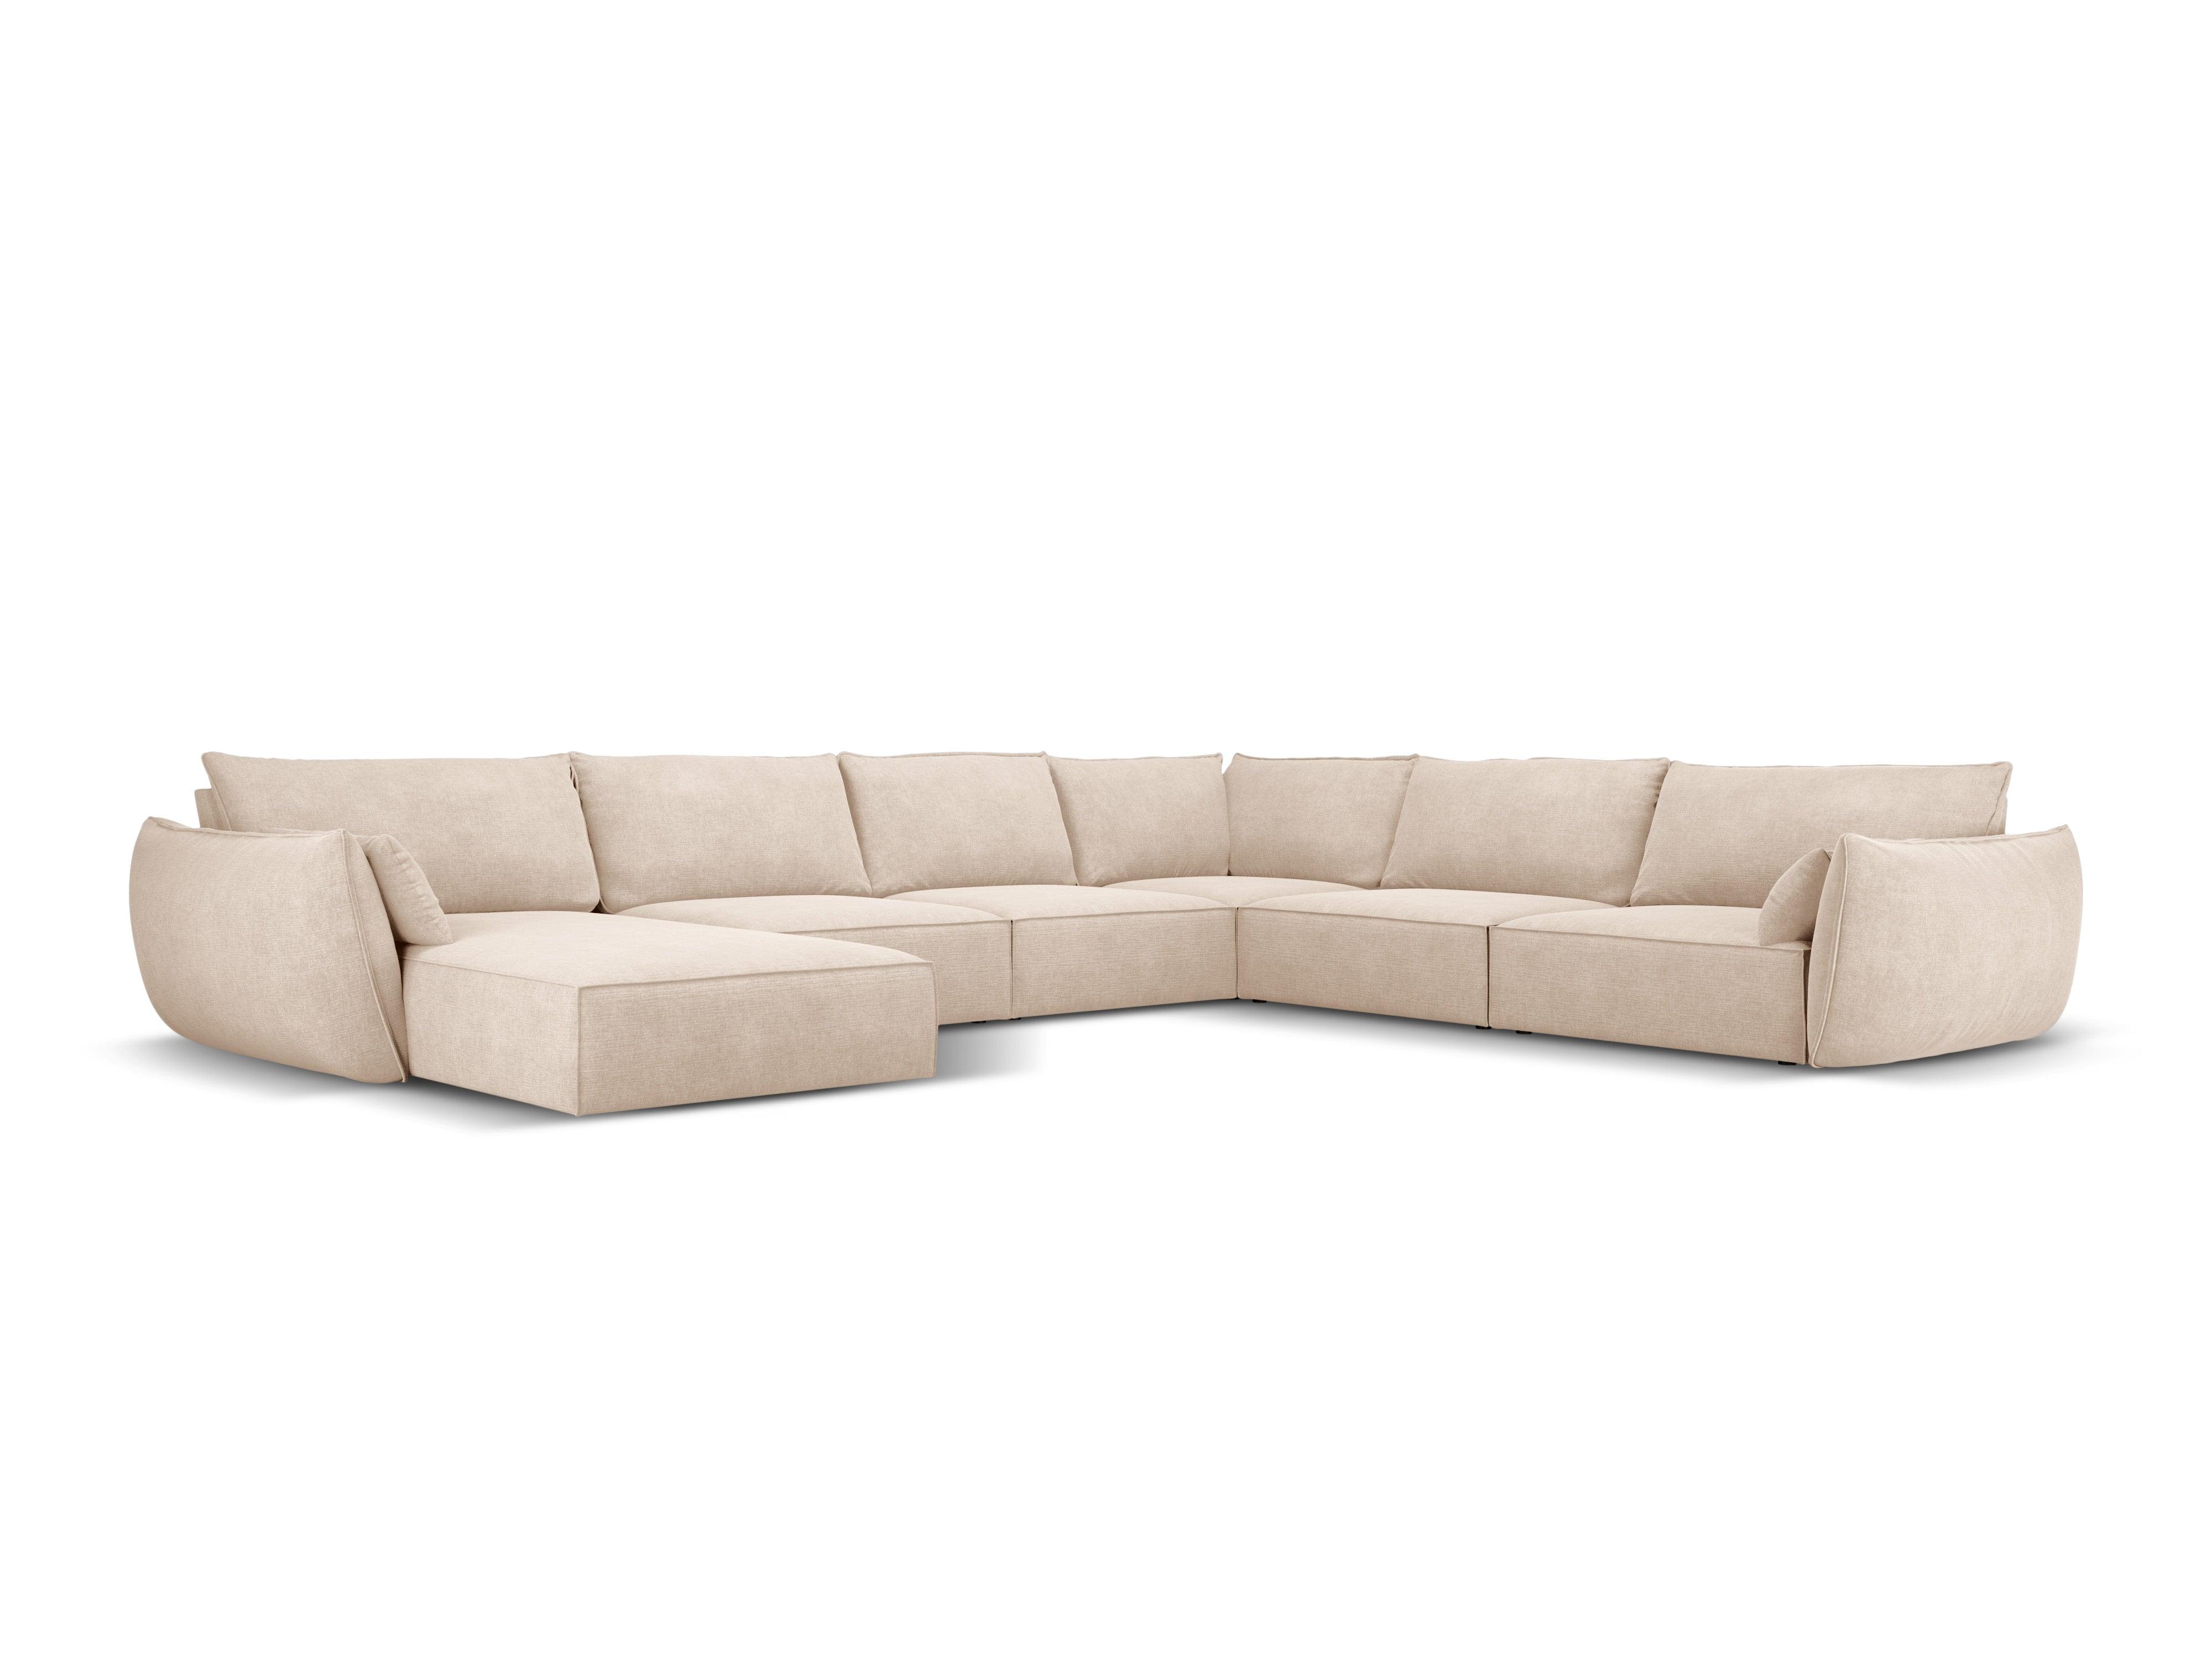 Panoramic Right Corner Sofa, "Vanda", 8 Seats, 384x284x85
Made in Europe, Mazzini Sofas, Eye on Design